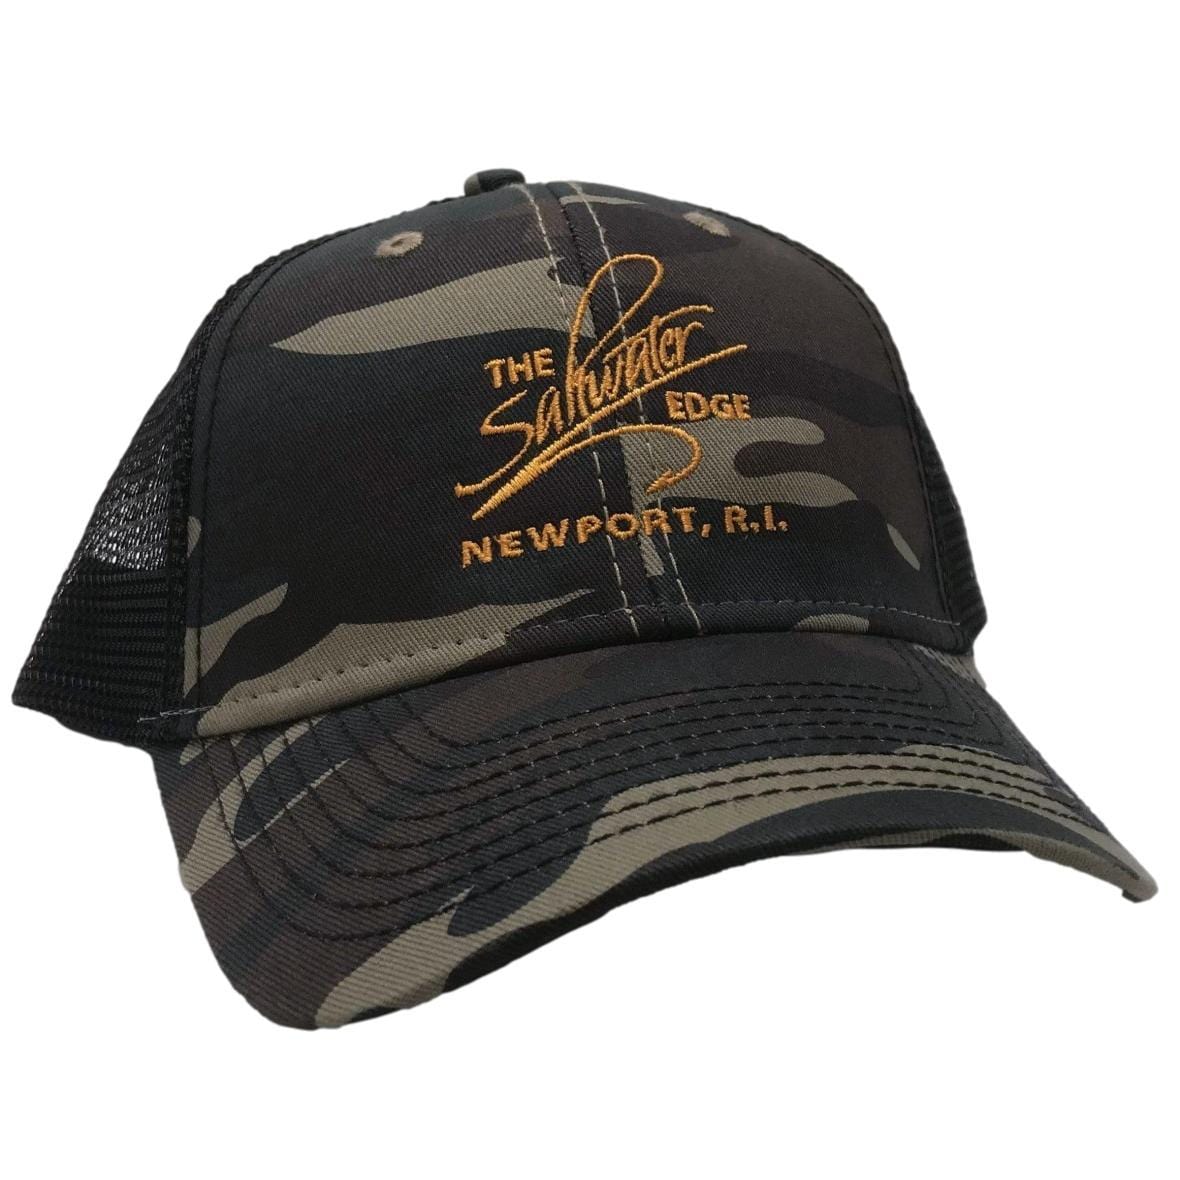 Saltwater Edge Logo Sideline Trucker Hat